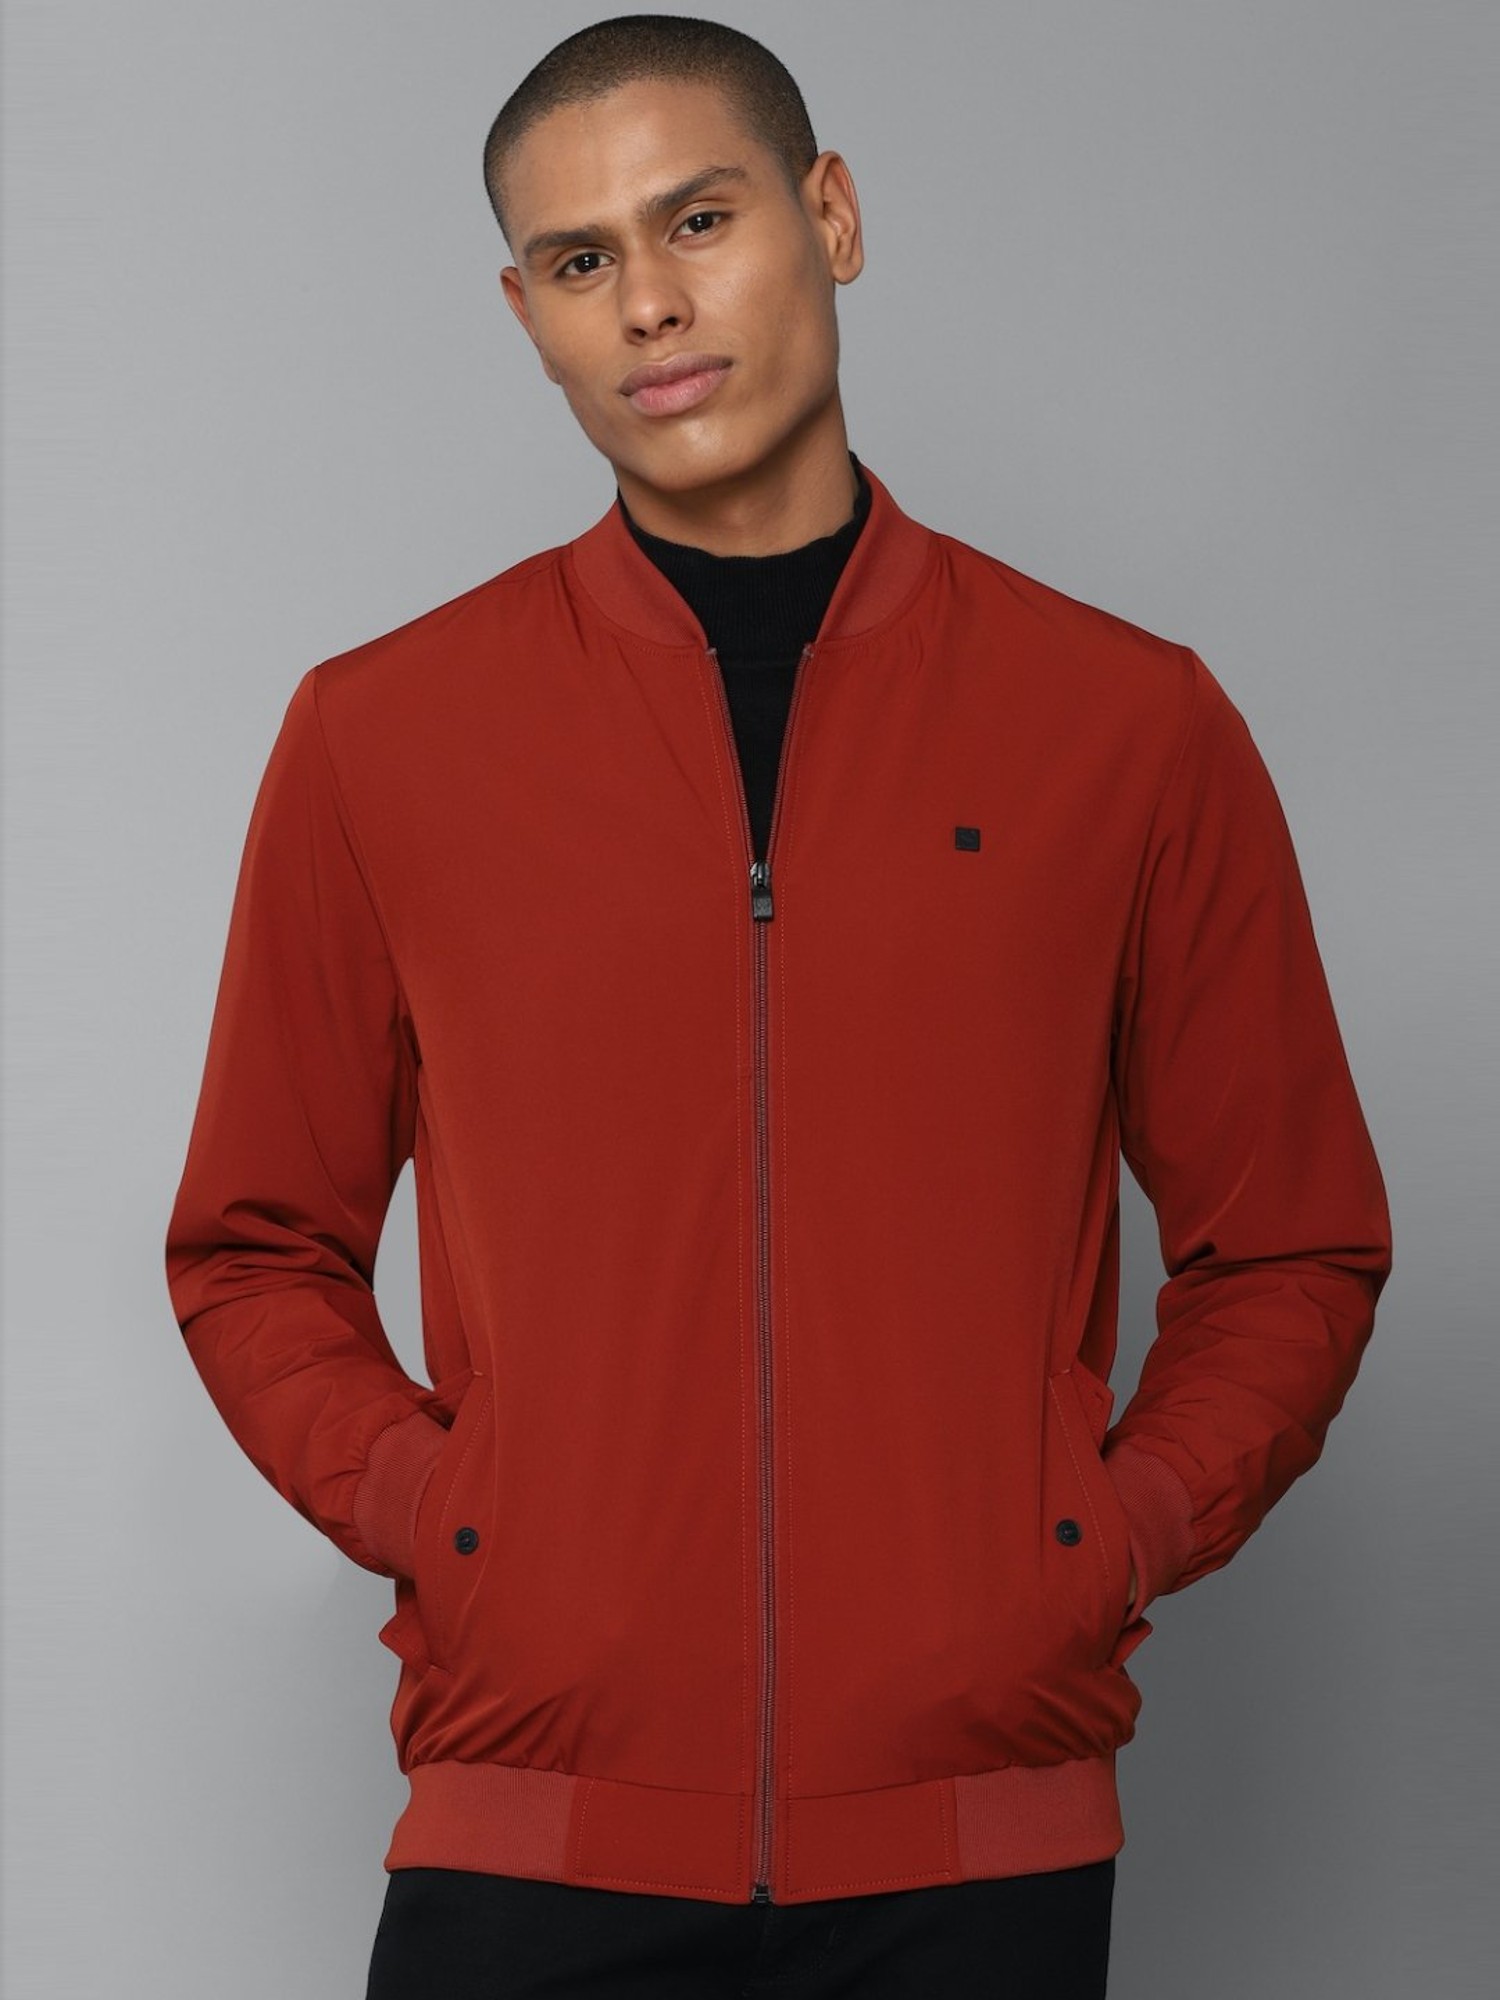 Buy Allen Solly Red Cotton Regular Fit Bomber Jacket for Mens